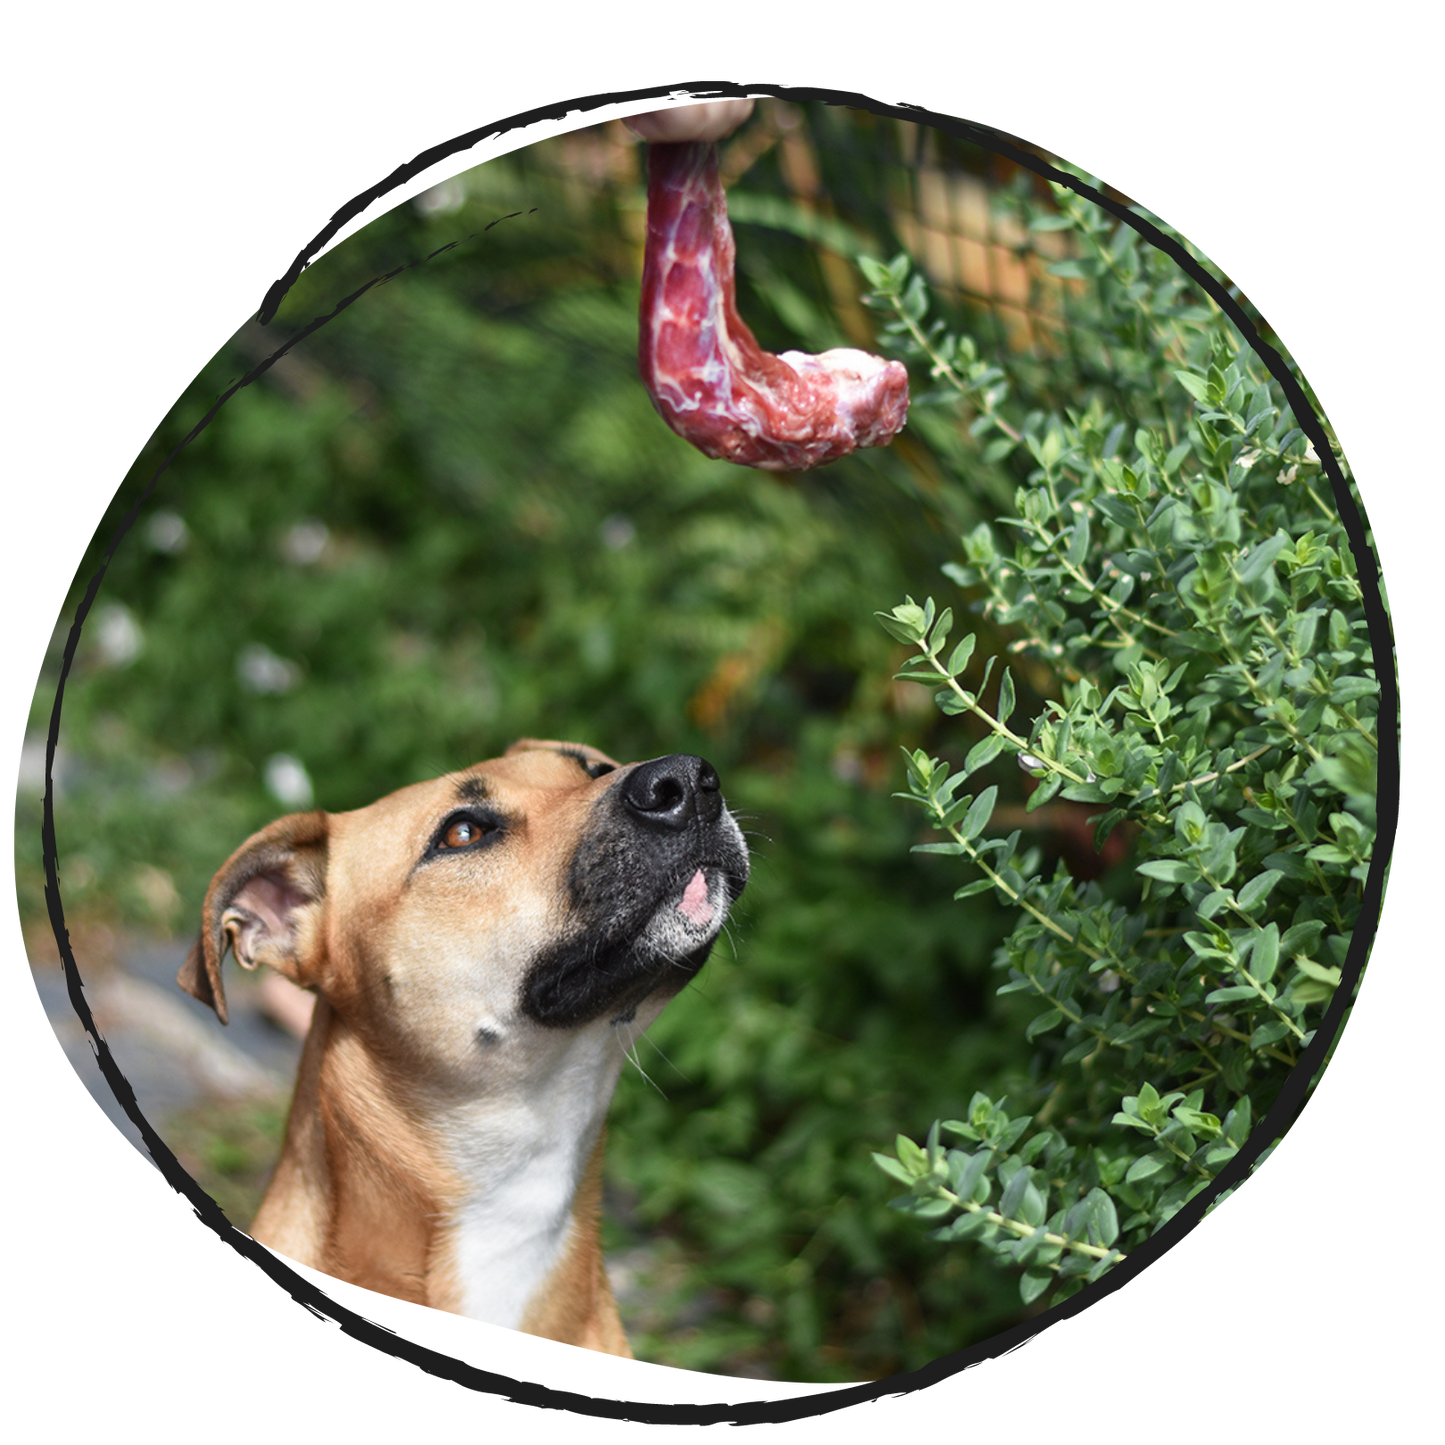 doggobone whole raw pet food duck necks 1kg dog sniffing